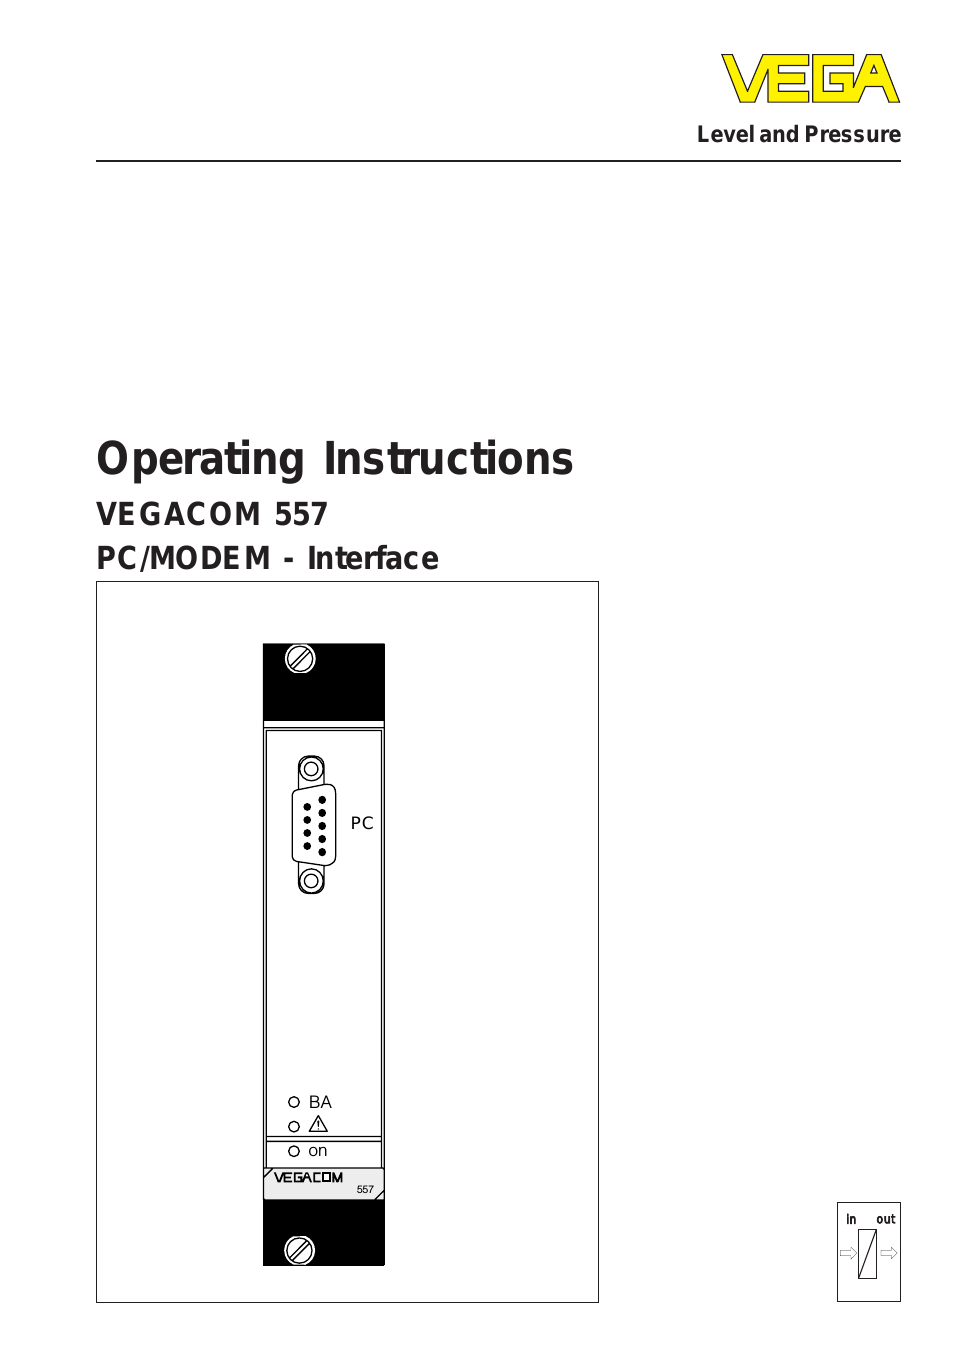 VEGACOM 557 PC-MODEM - Interface